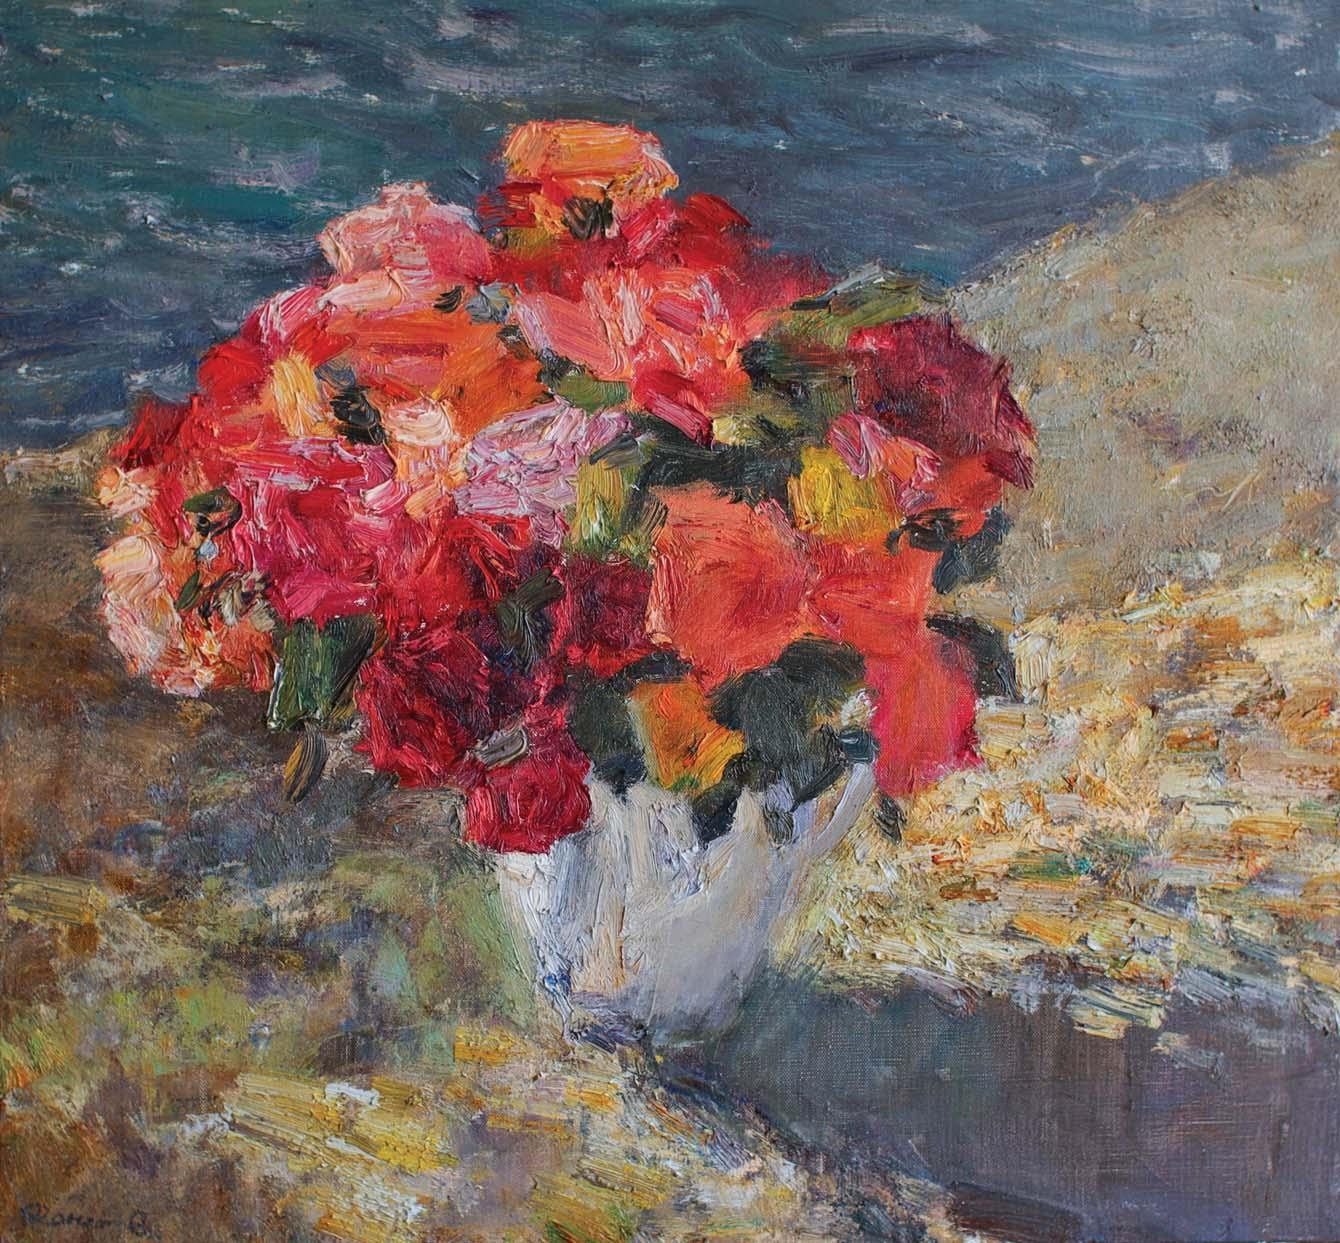 Roman Konstantinov Landscape Painting - Roses on the Shore